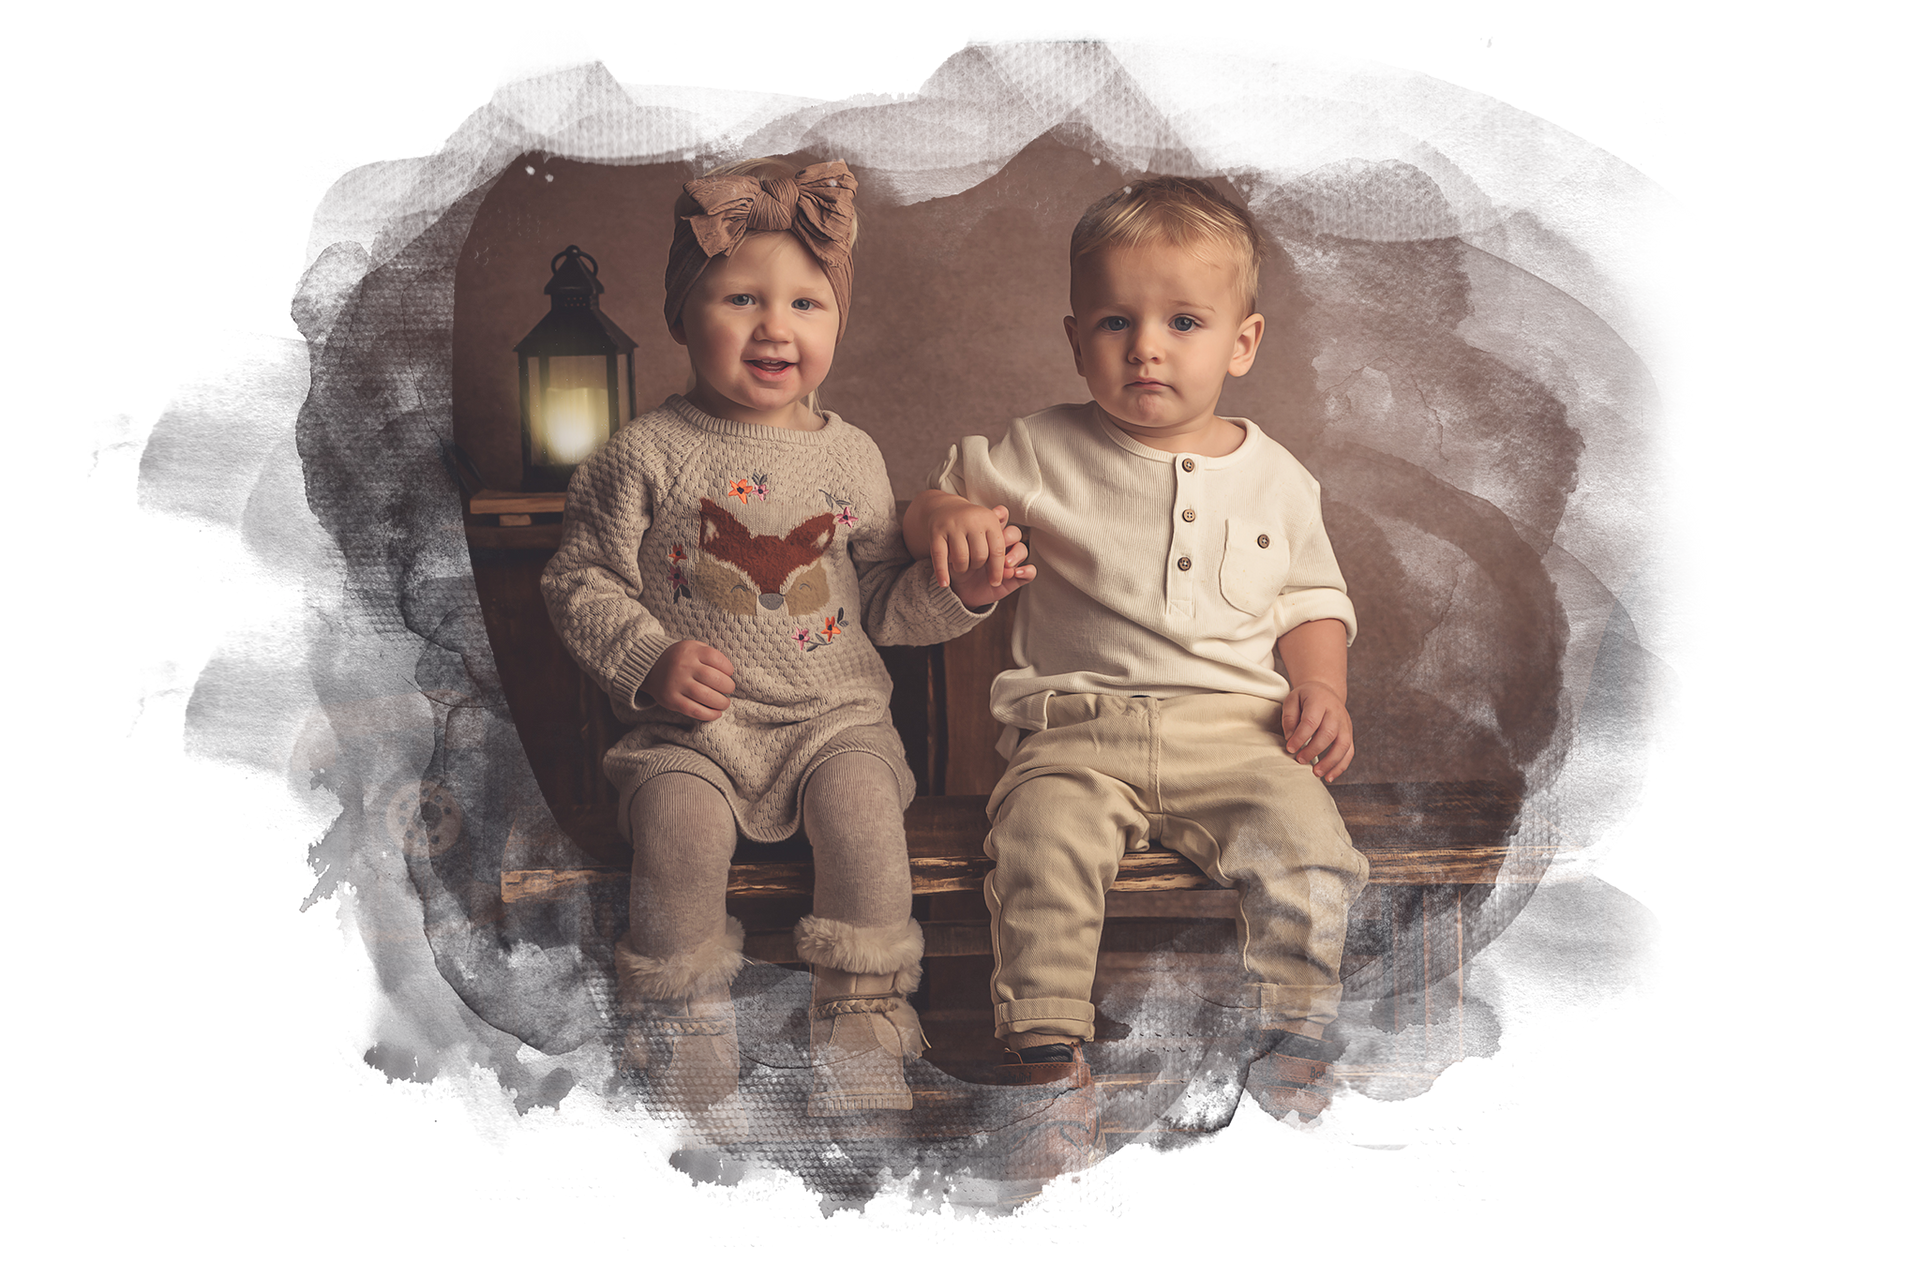 Best-Buddy-Kinderfotoshooting-Preise-Momentpakete-zwinsmomentmanufaktur-FotografinHenstedtUlzburg
